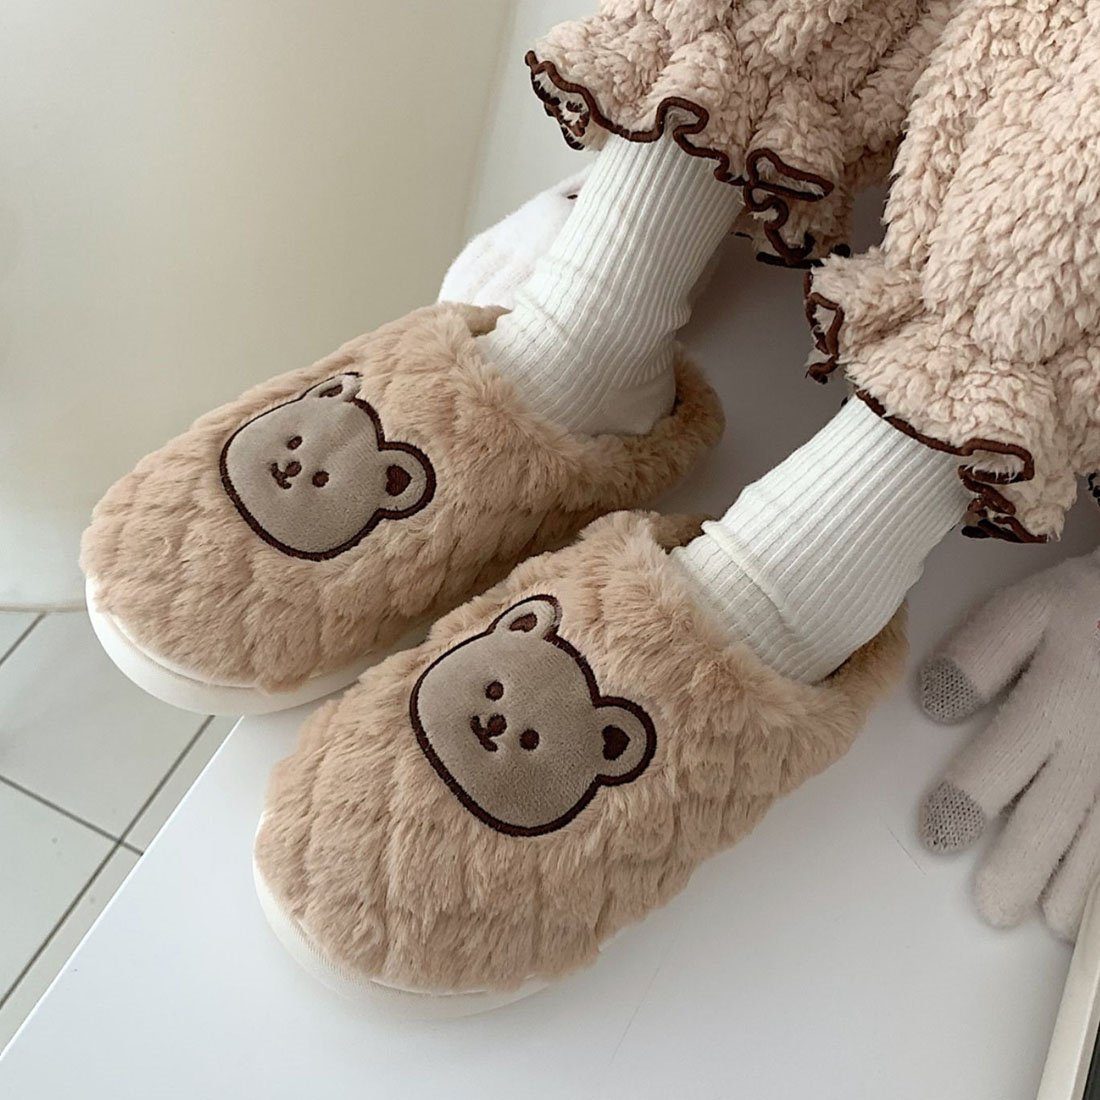 DÖRÖY WarmePlüschpantoffeln für Damen,Cartoon-Bären-Pantoffeln aus Baumwolle Hausschuhe khaki Plüsch